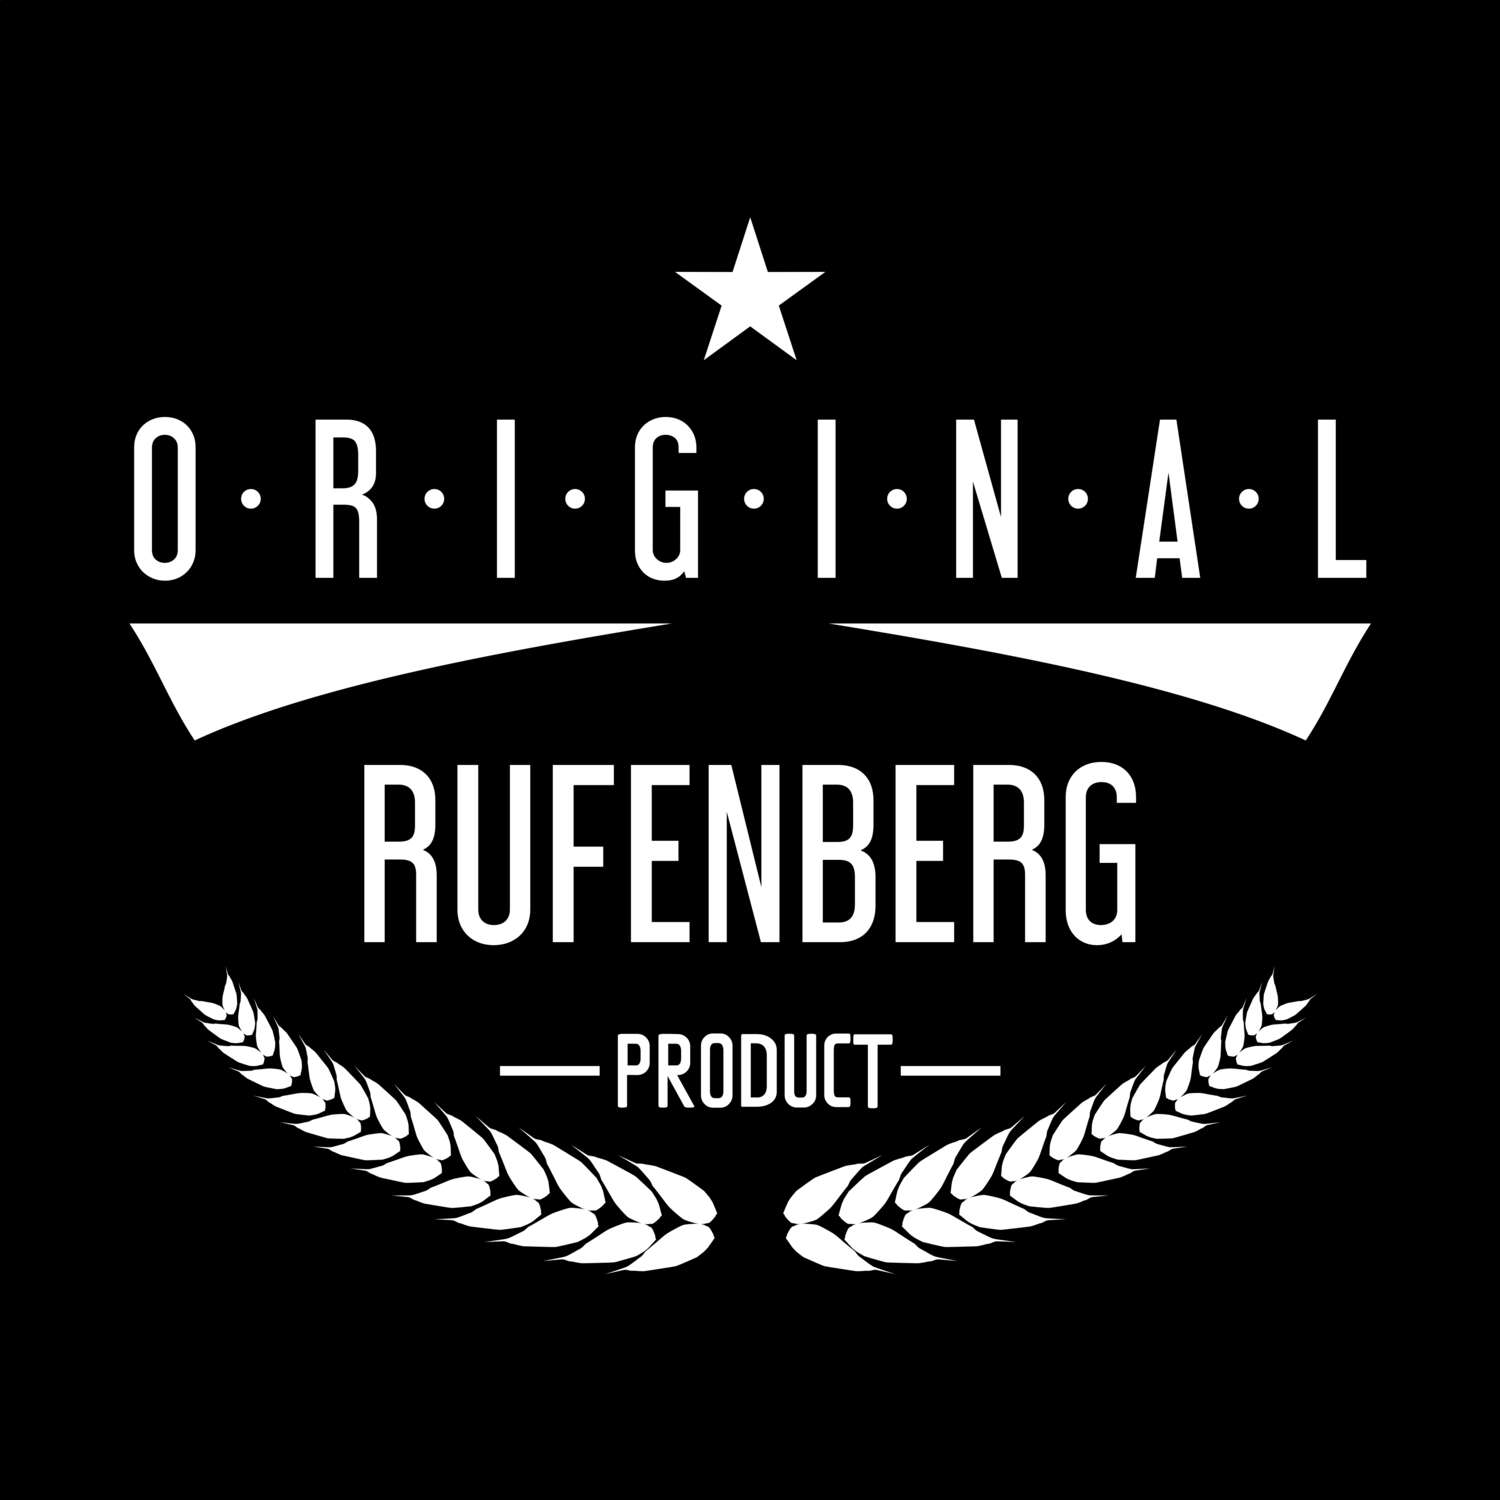 Rufenberg T-Shirt »Original Product«